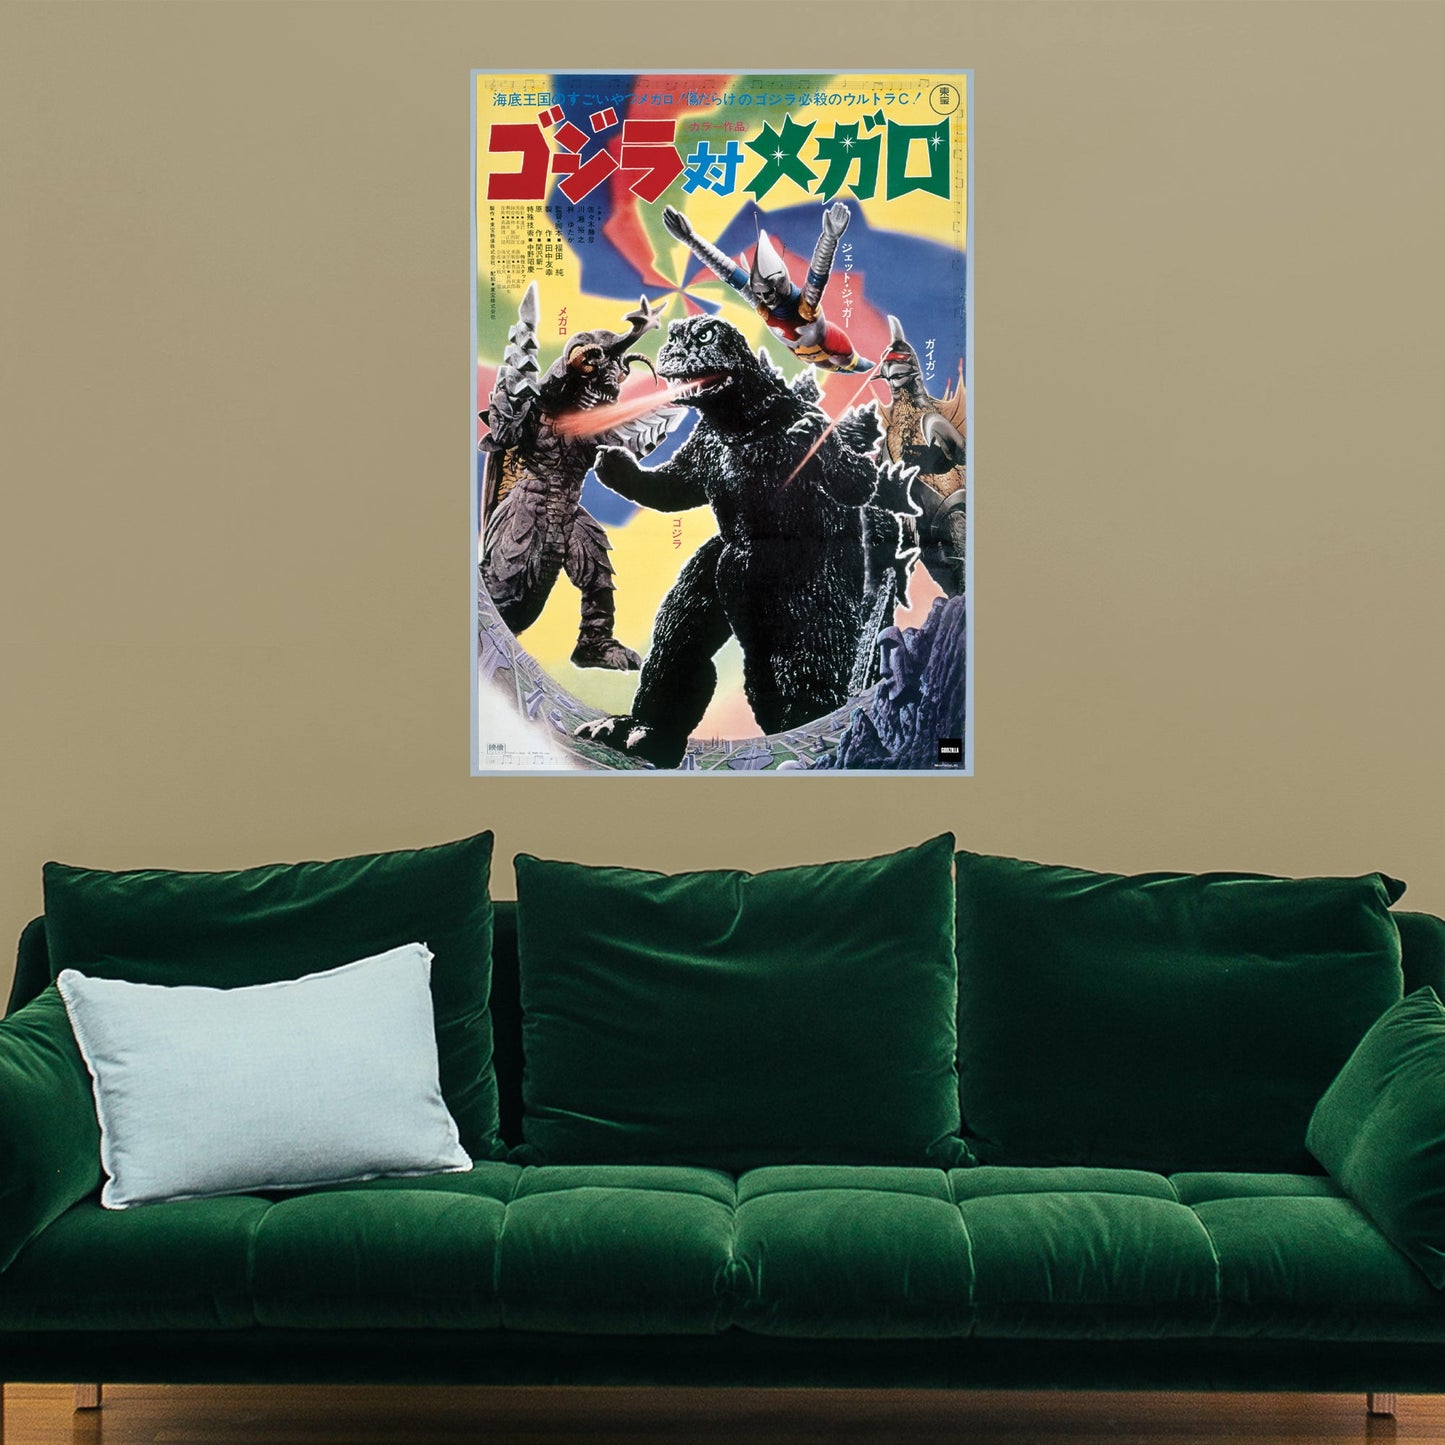 Godzilla: Godzilla vs Megalon (1973) Movie Poster Mural - Officially Licensed Toho Removable Adhesive Decal